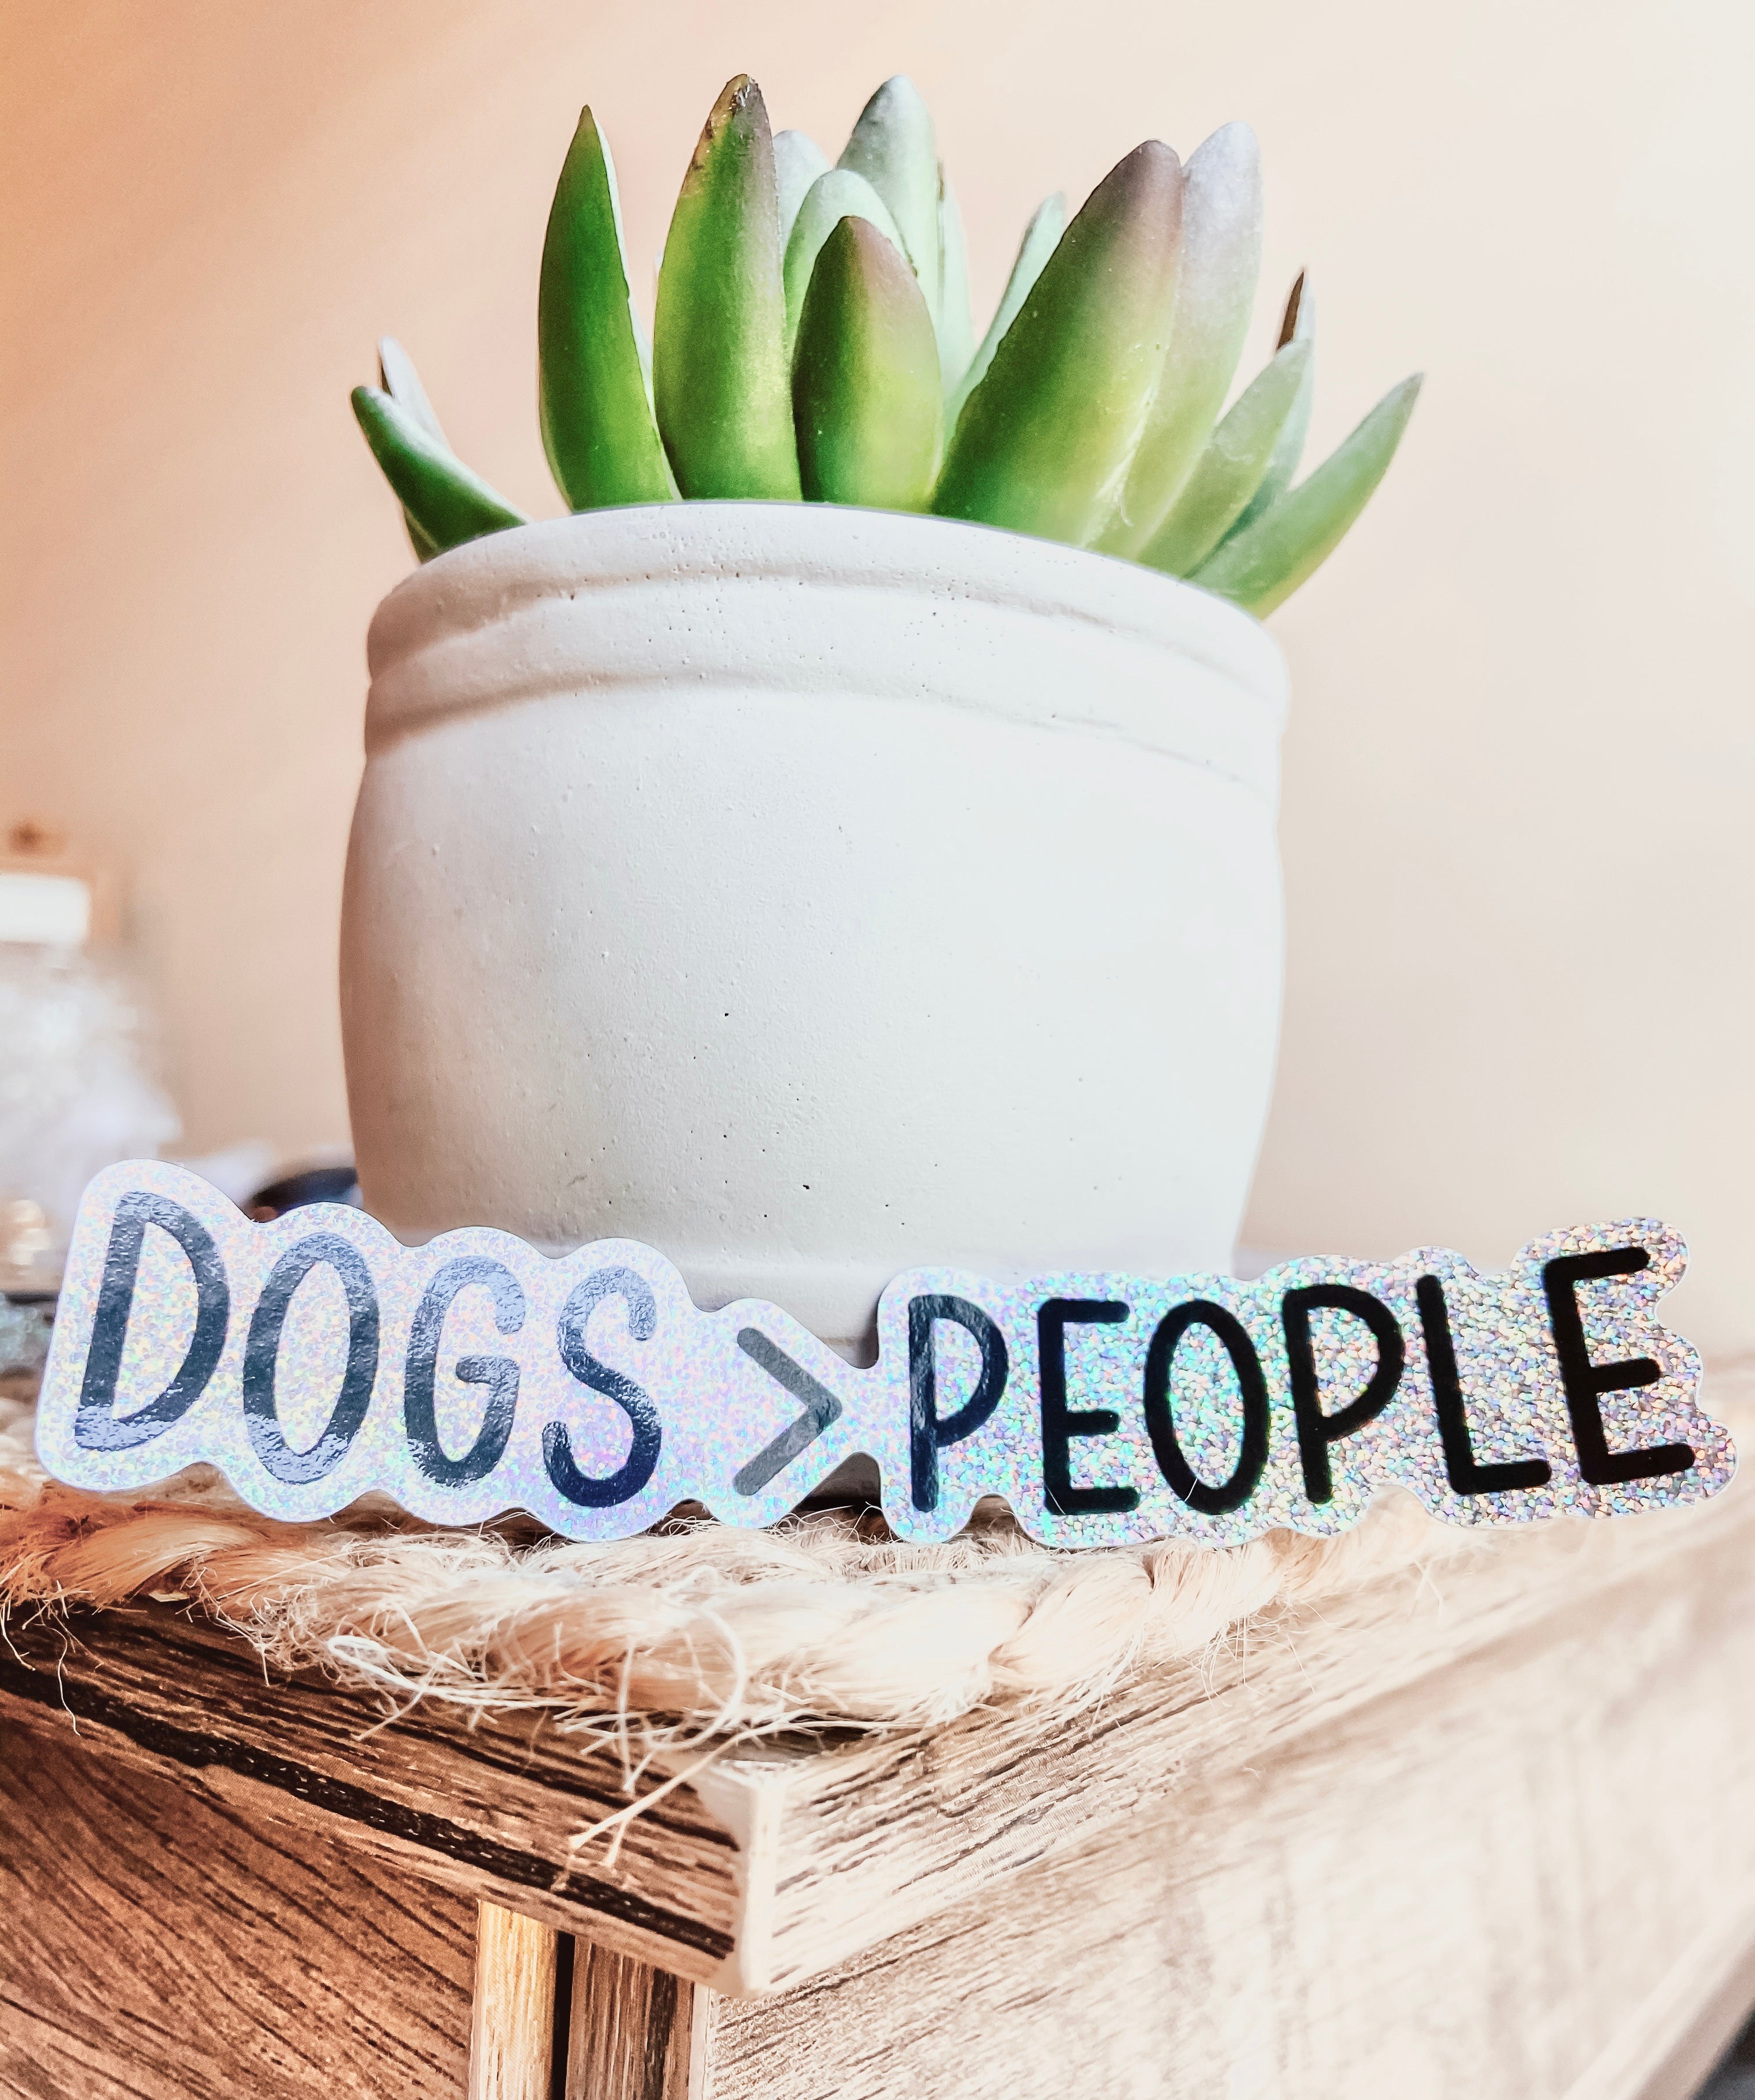 Dogs>People Sticker